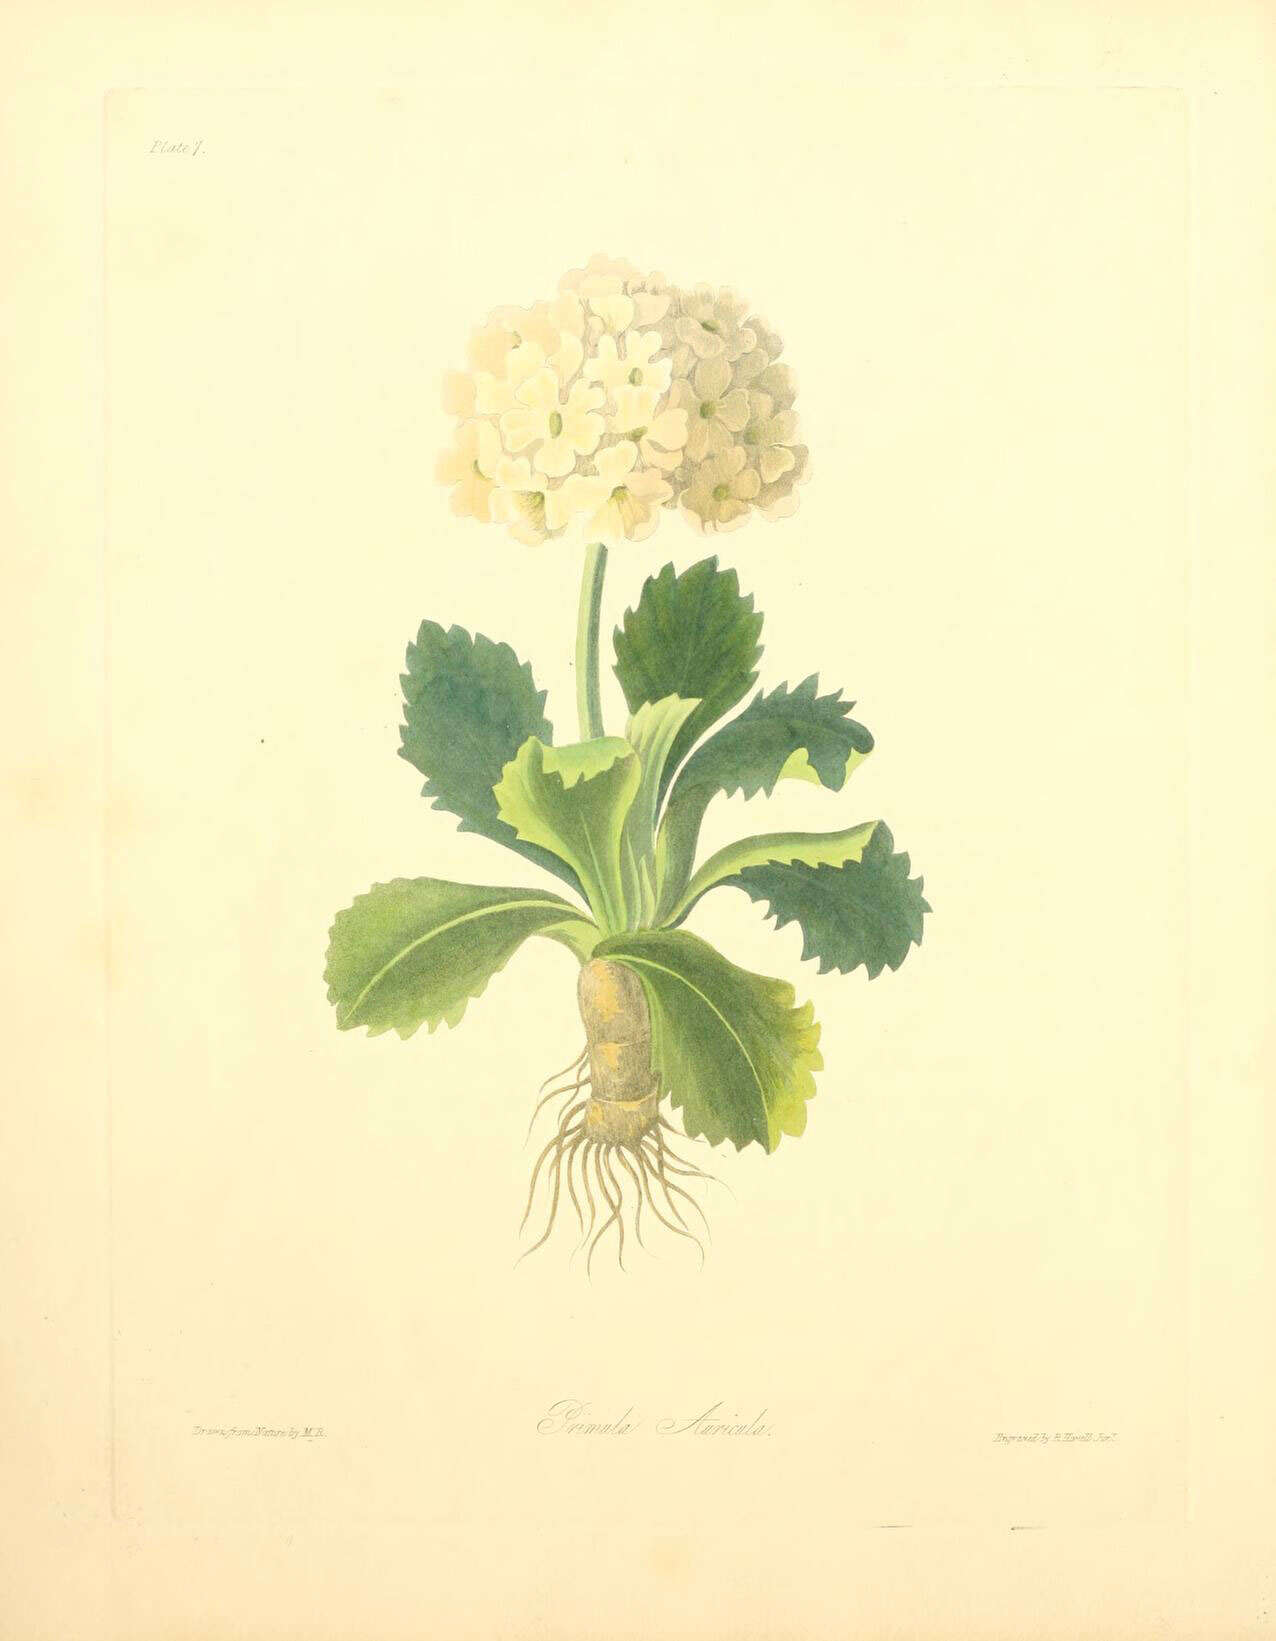 Image of Primula auricula L.